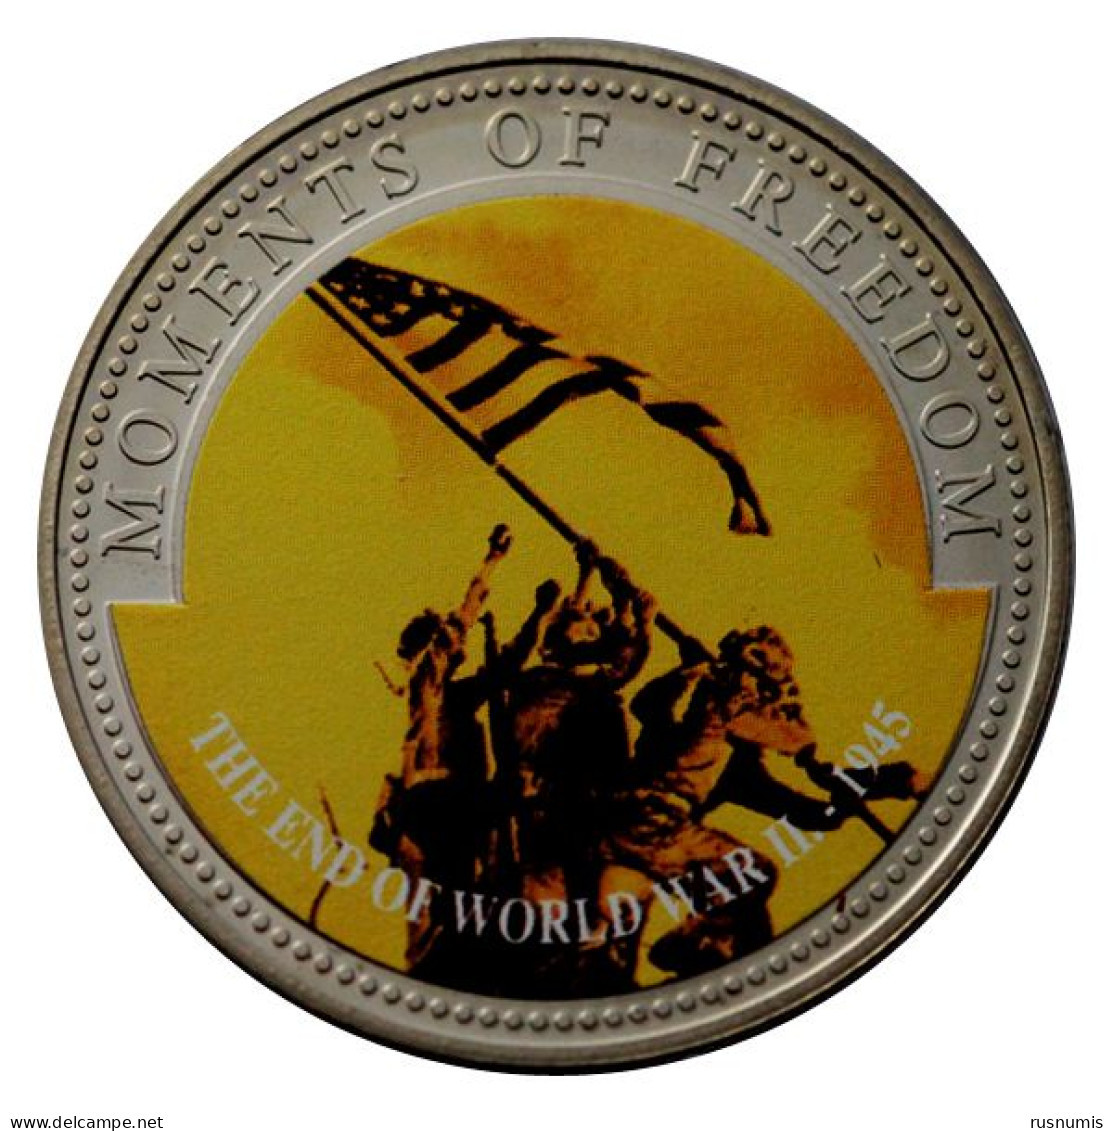 LIBERIA 10 DOLLARS MOMENTS OF FREEDOM - THE END OF WORLD WAR II 2001 - Liberia